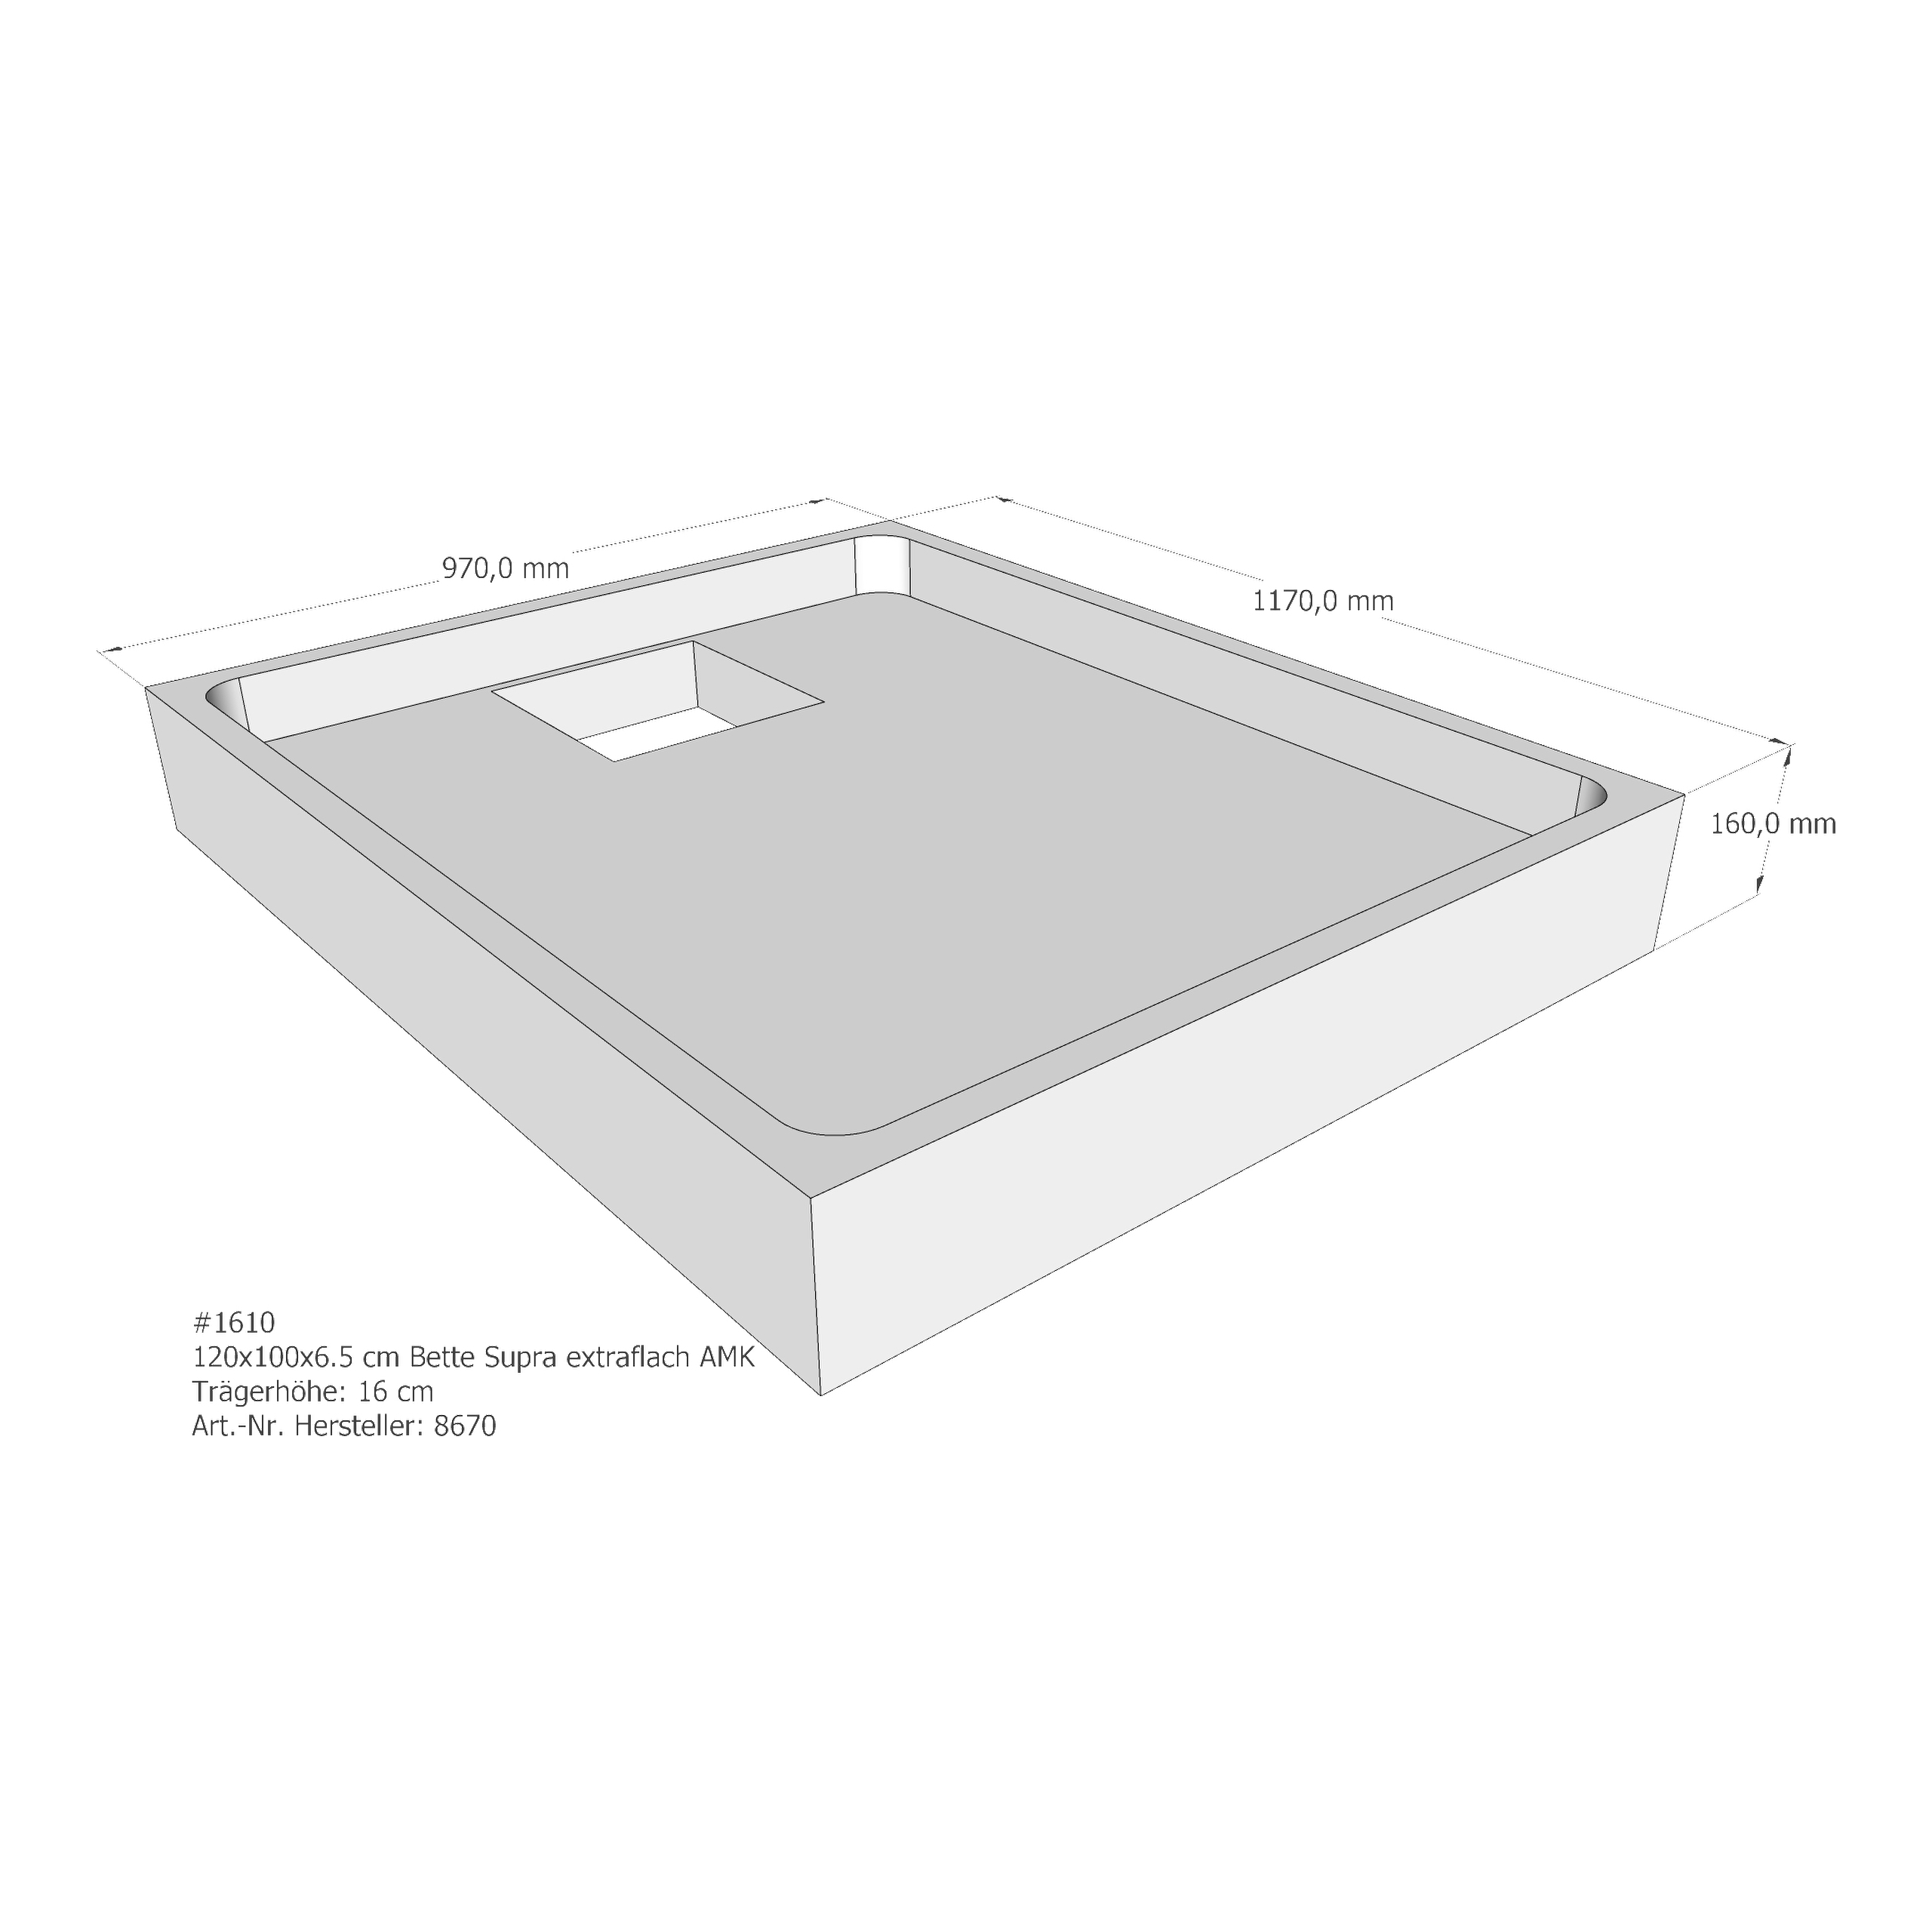 Duschwannenträger Bette BetteSupra (extraflach) 120x100x6,5 cm AMK210